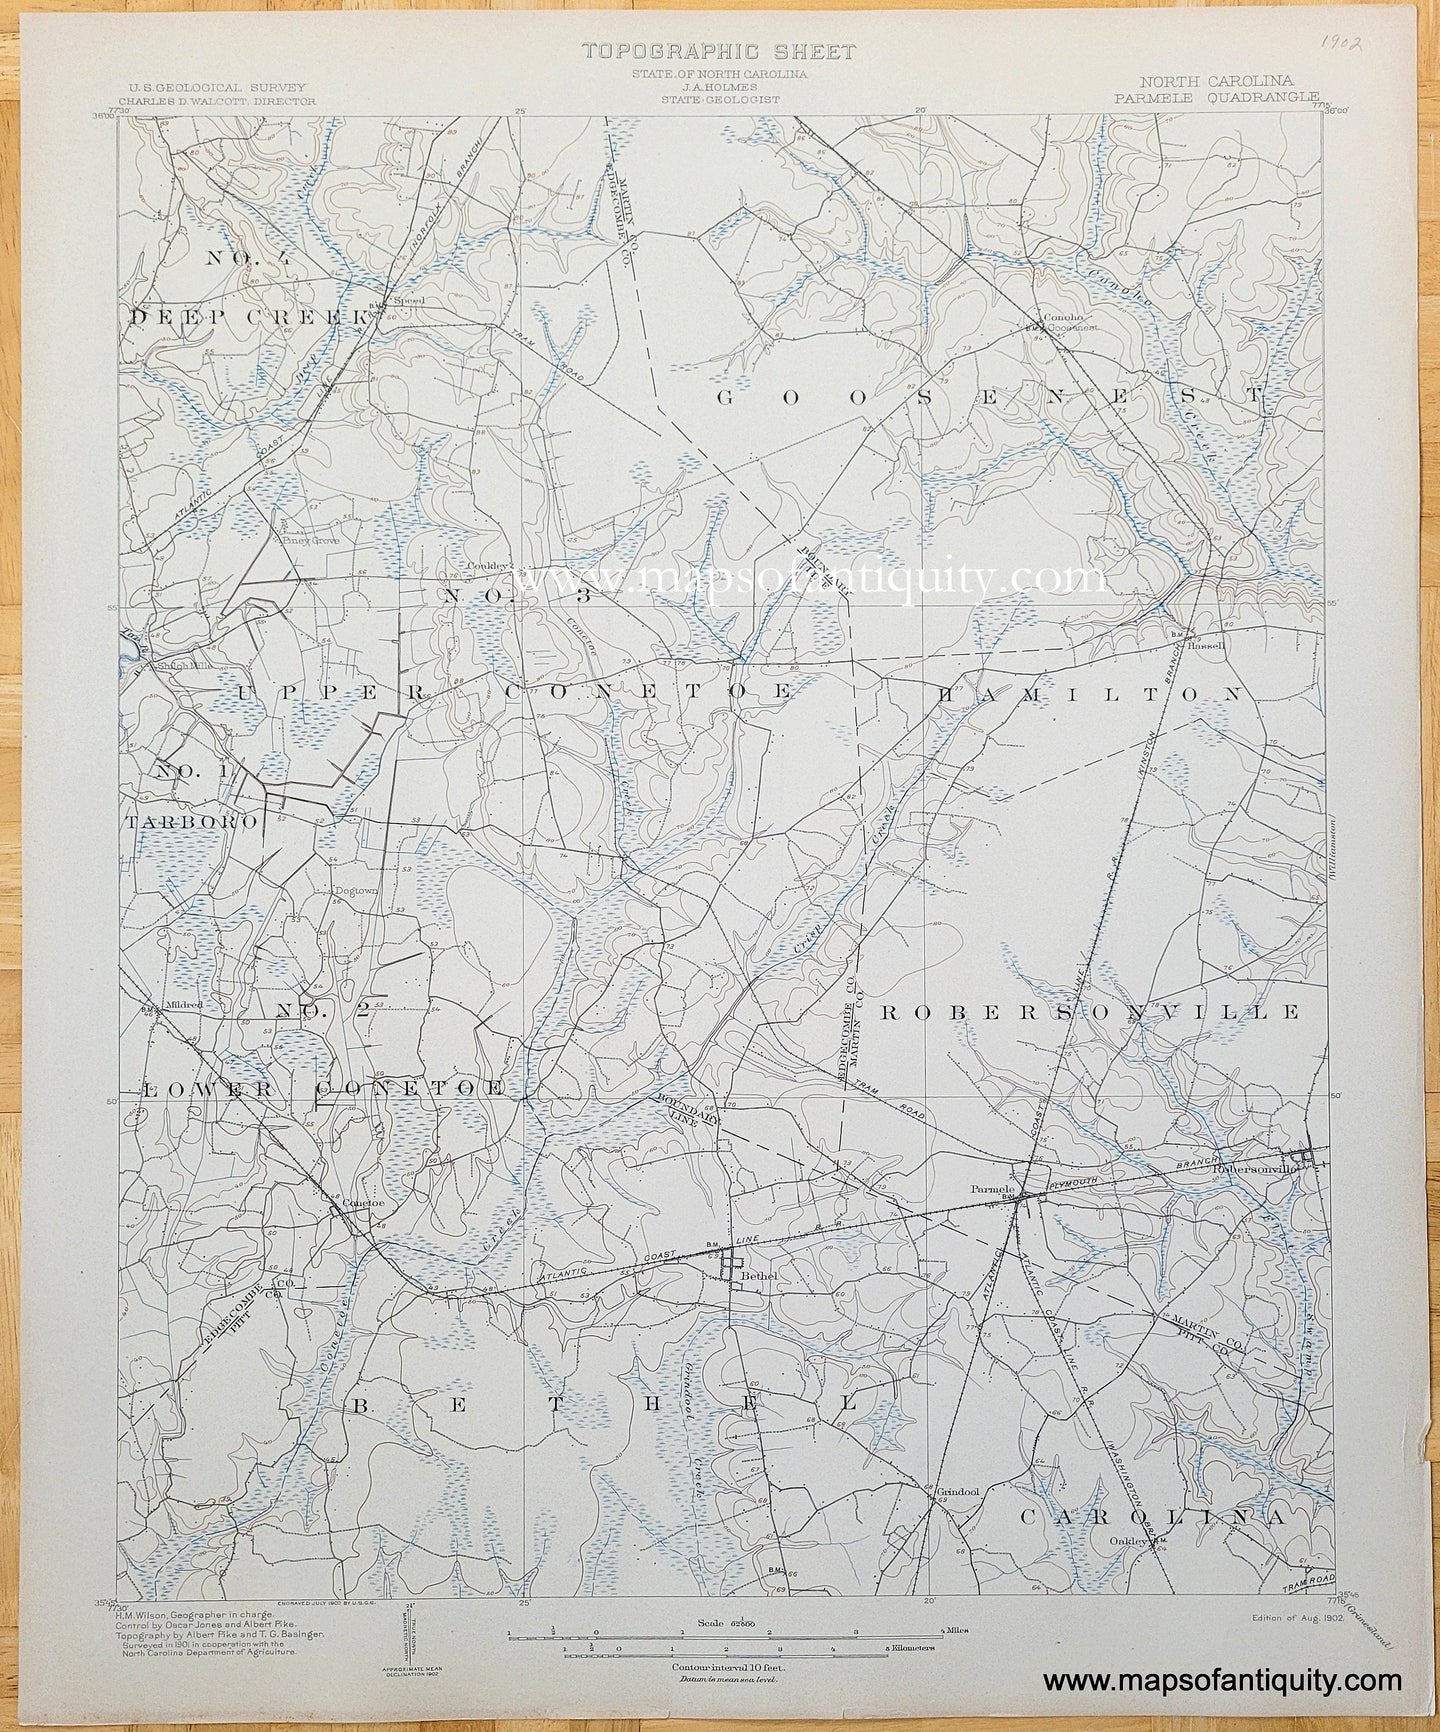 Genuine-Antique-Topographic-Map-North-Carolina-Parmele-Quadrangle-1902-US-Geological-Survey-Maps-Of-Antiquity